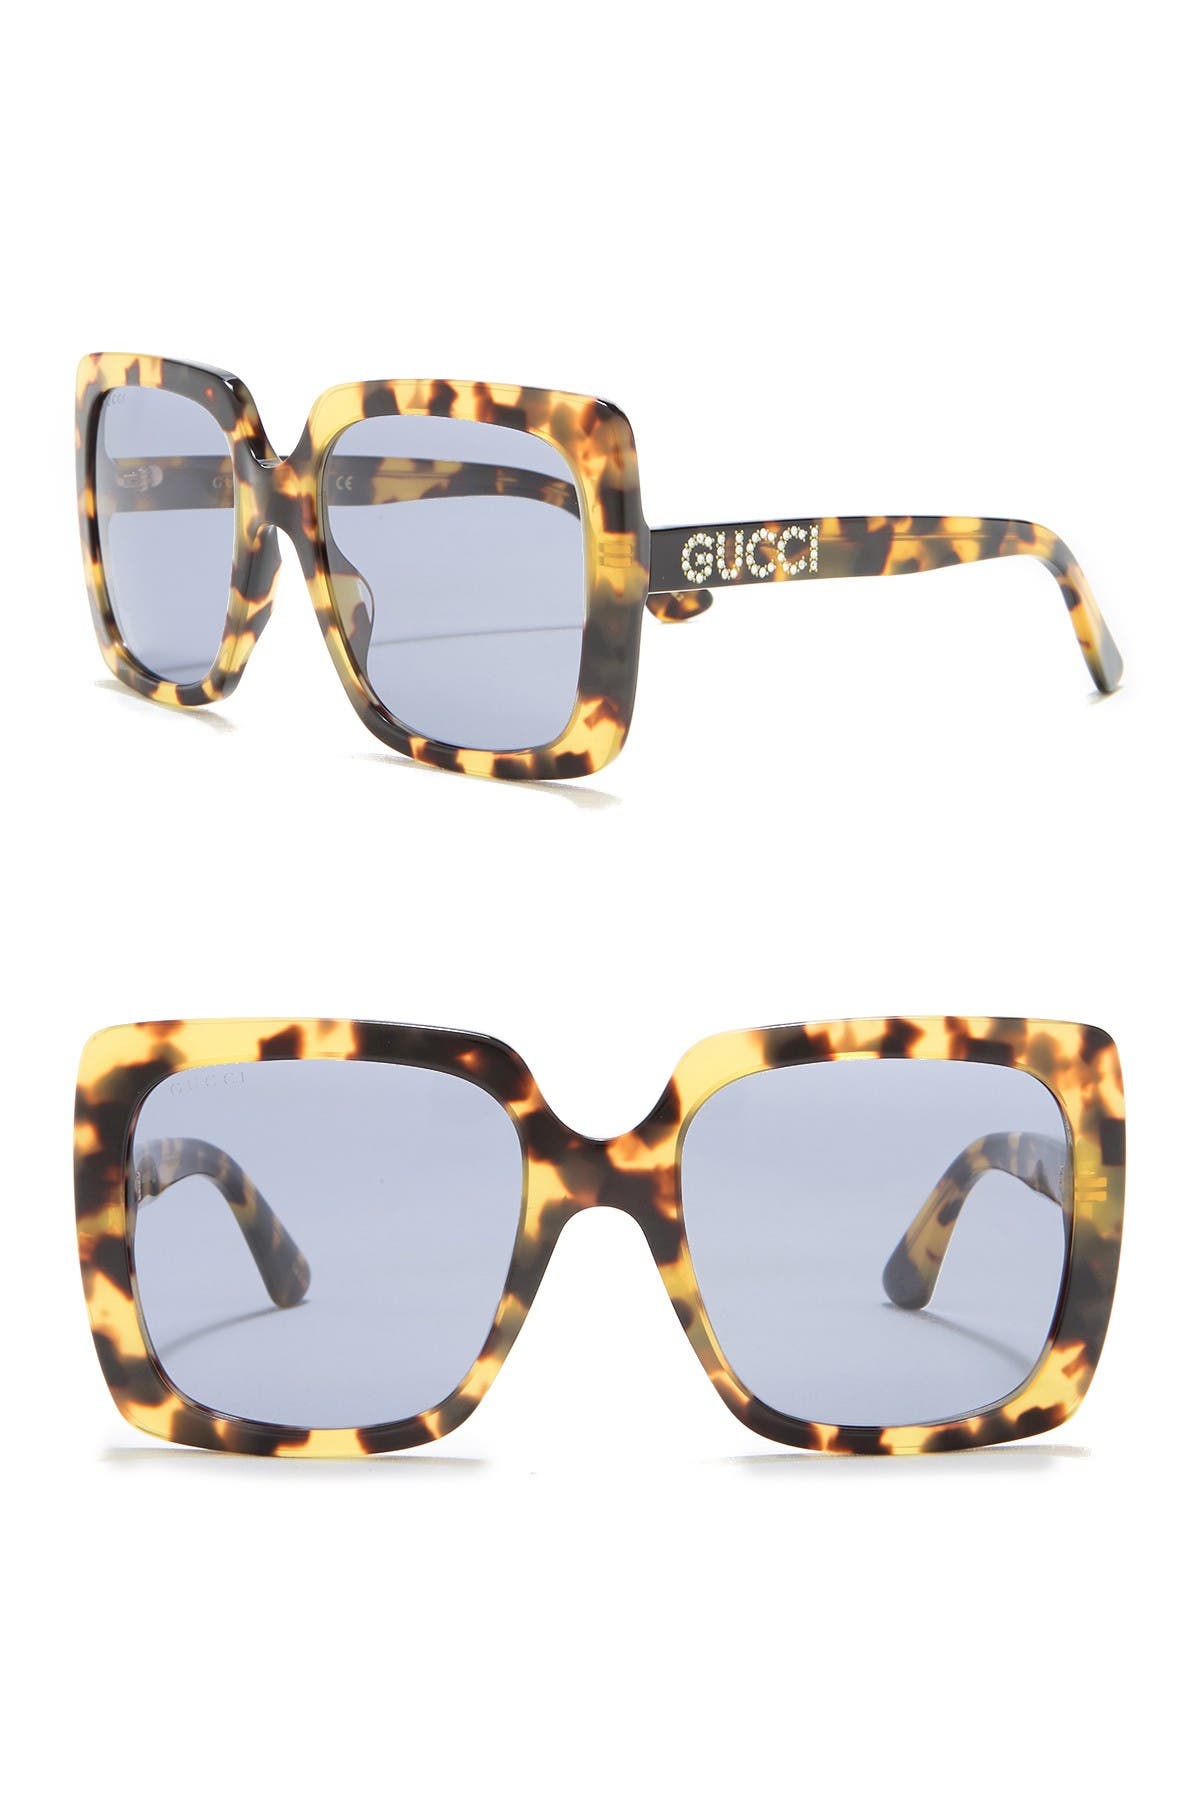 gucci sunglasses at nordstrom rack